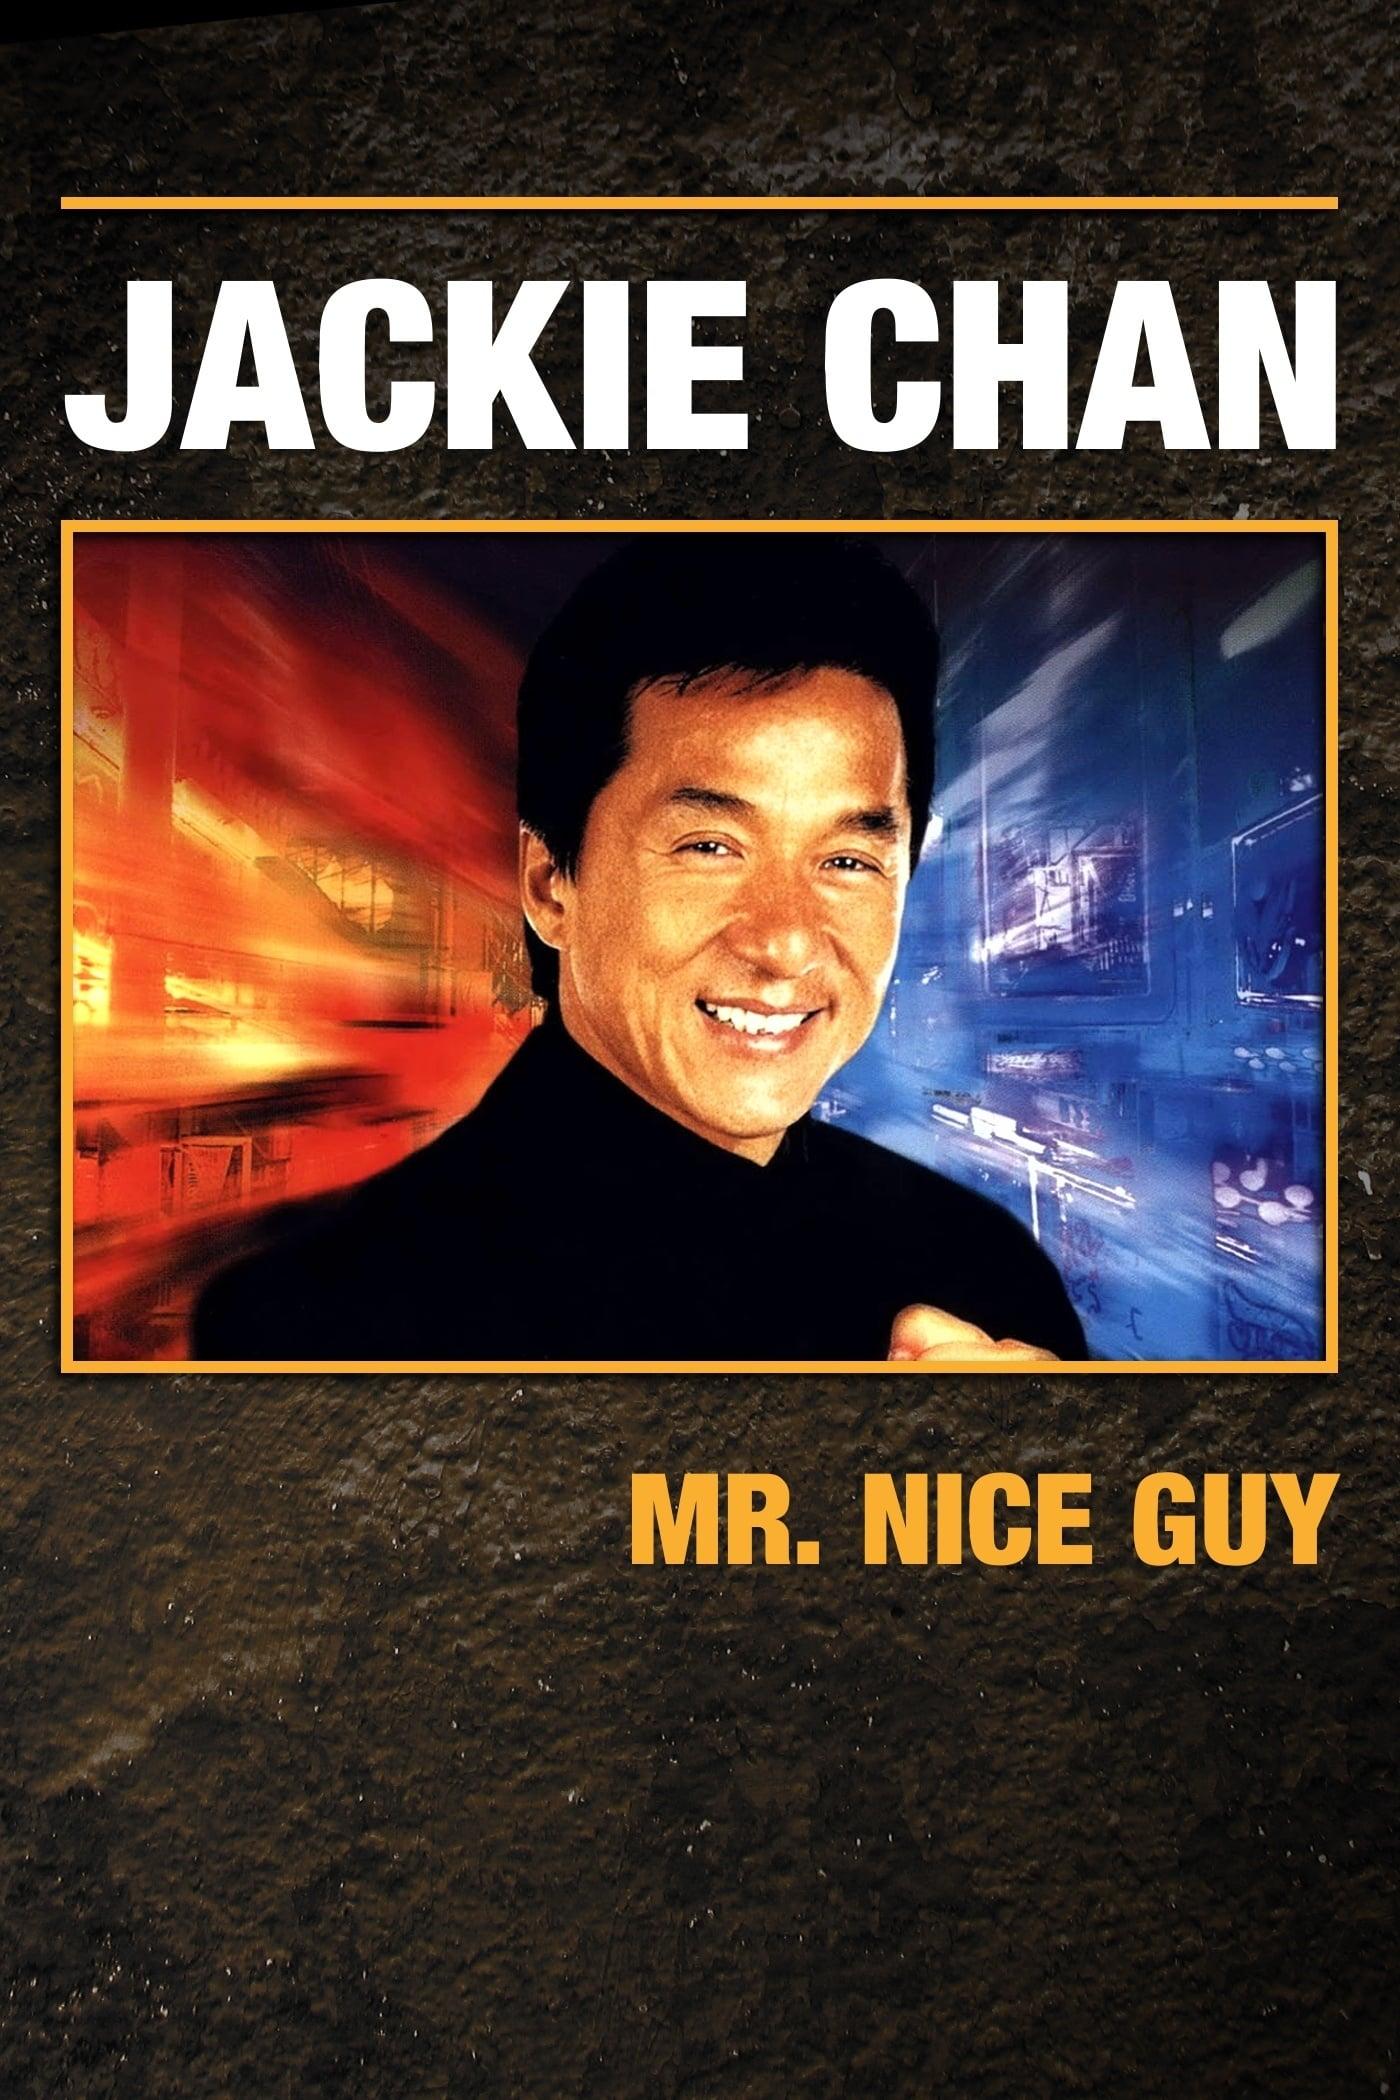 Mr. Nice Guy poster